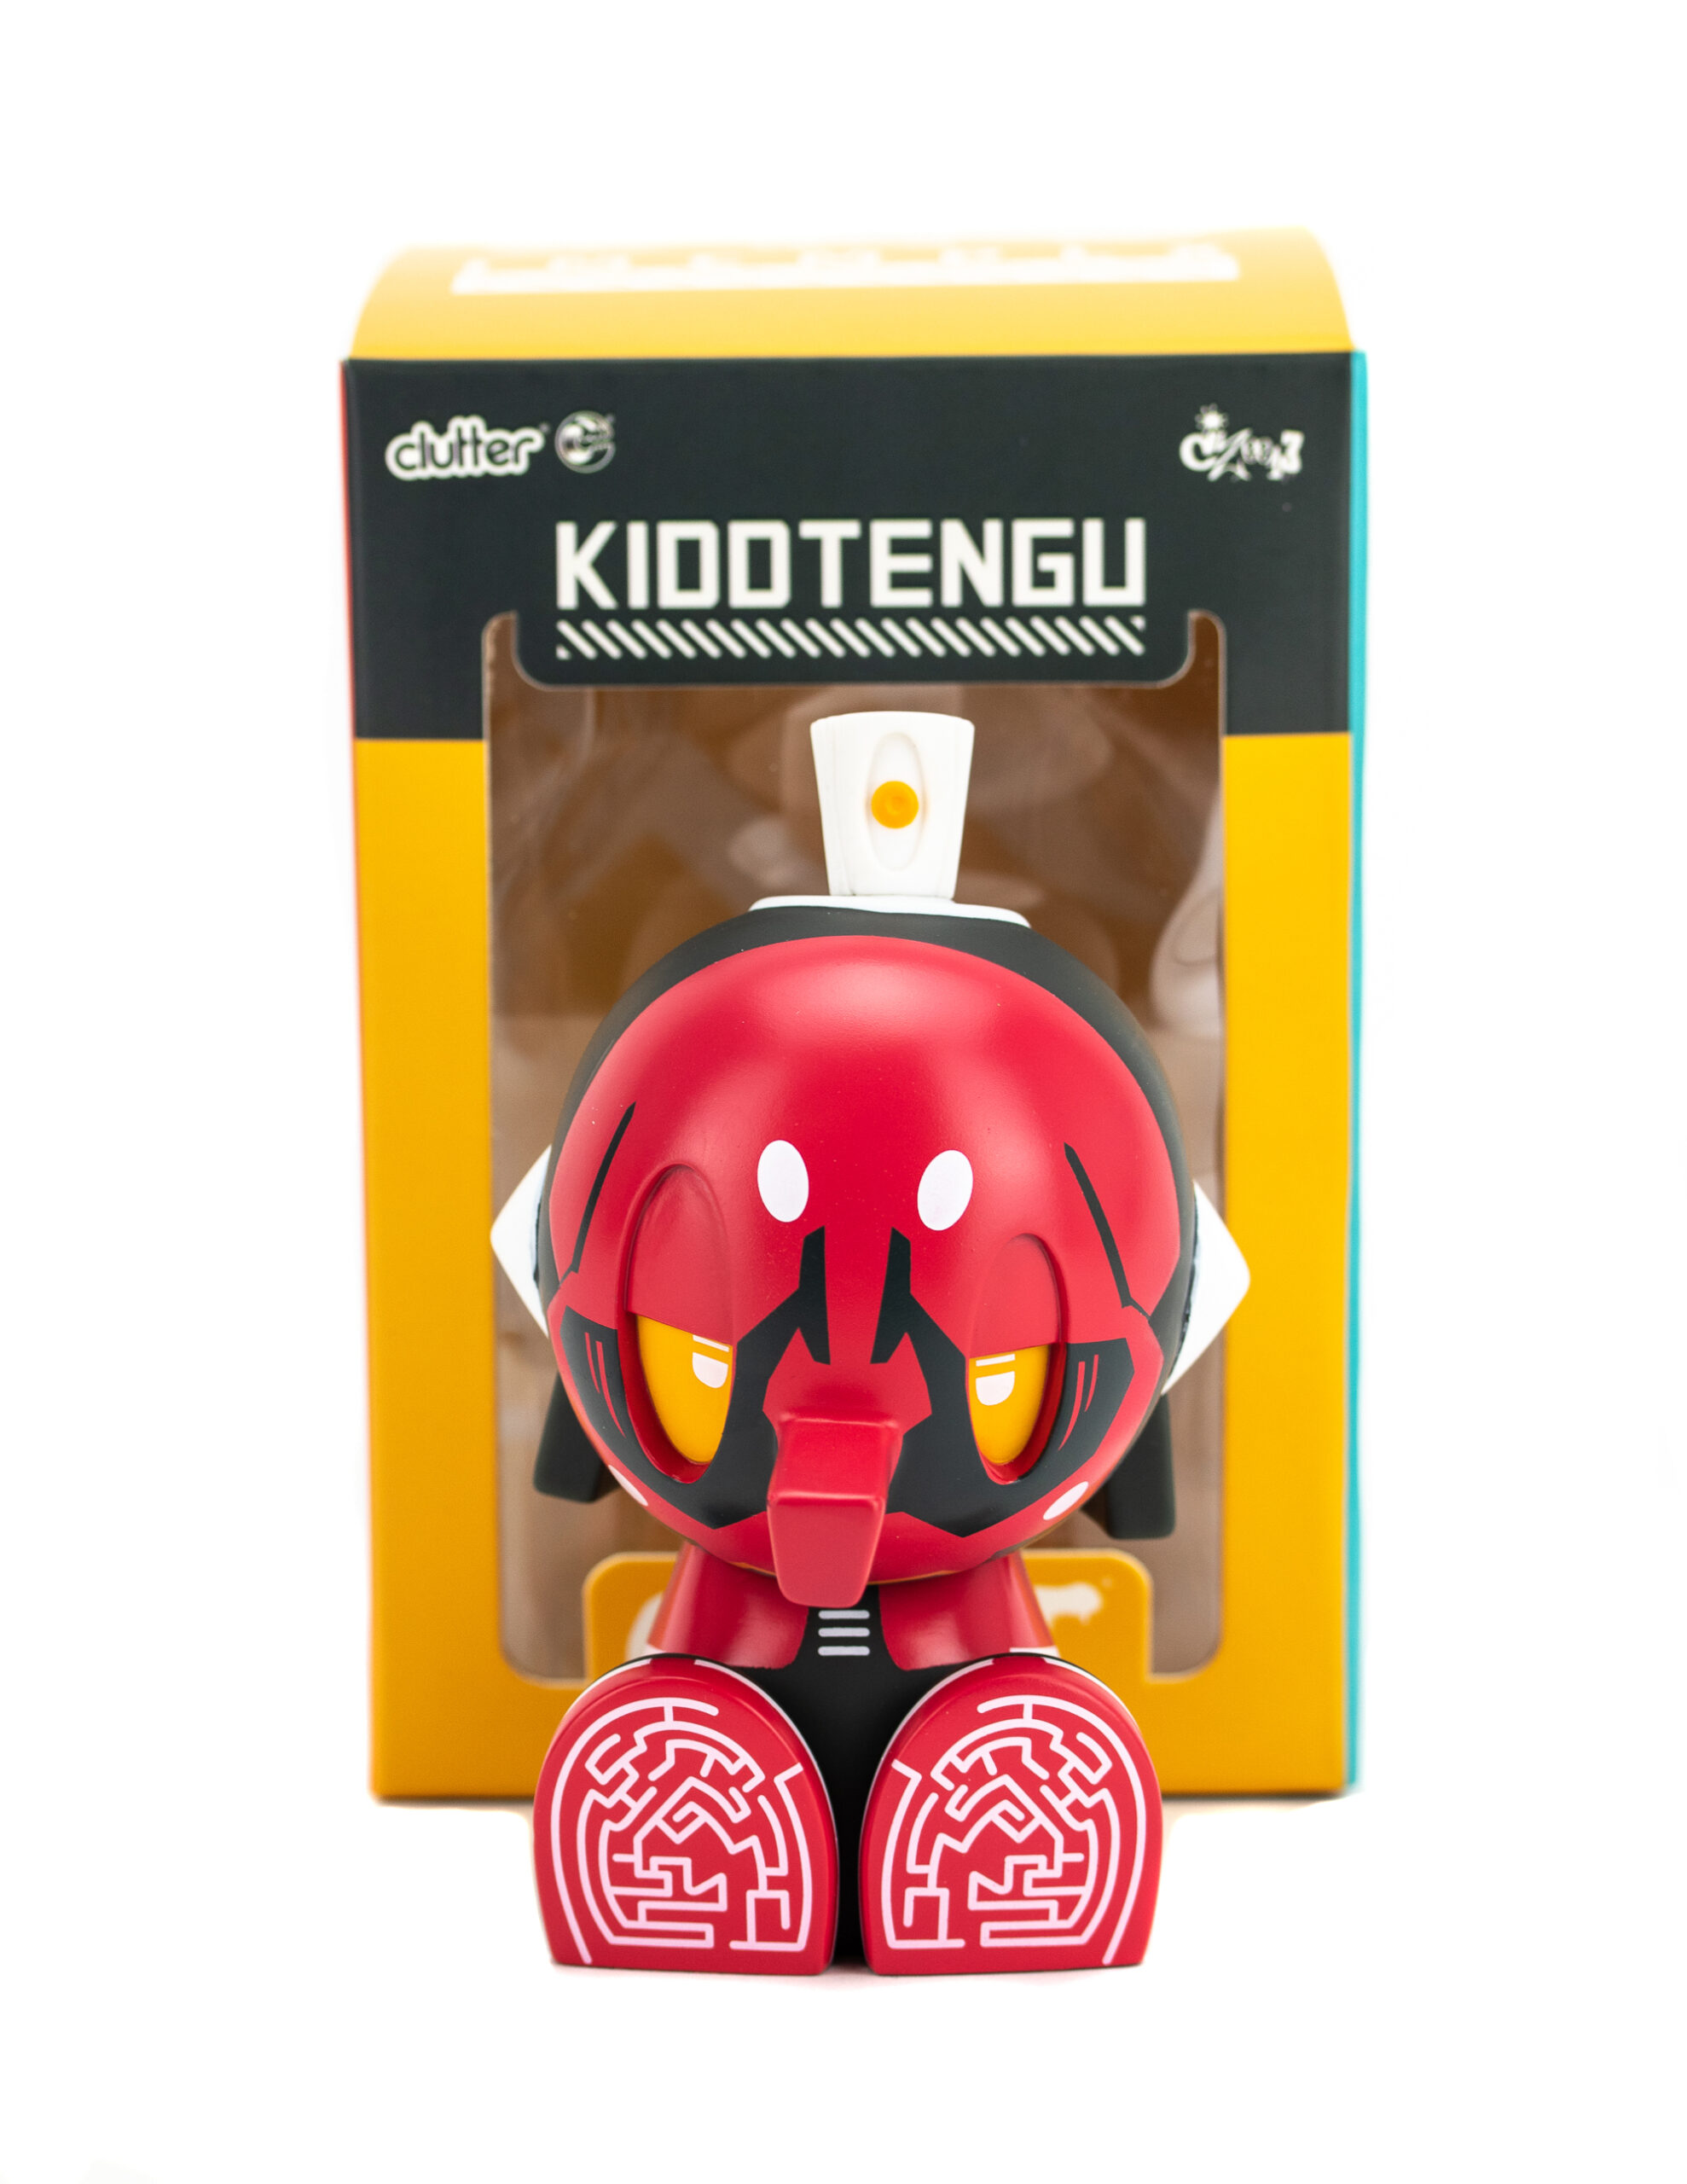 The Kidd Tengu Red 5oz Canbot